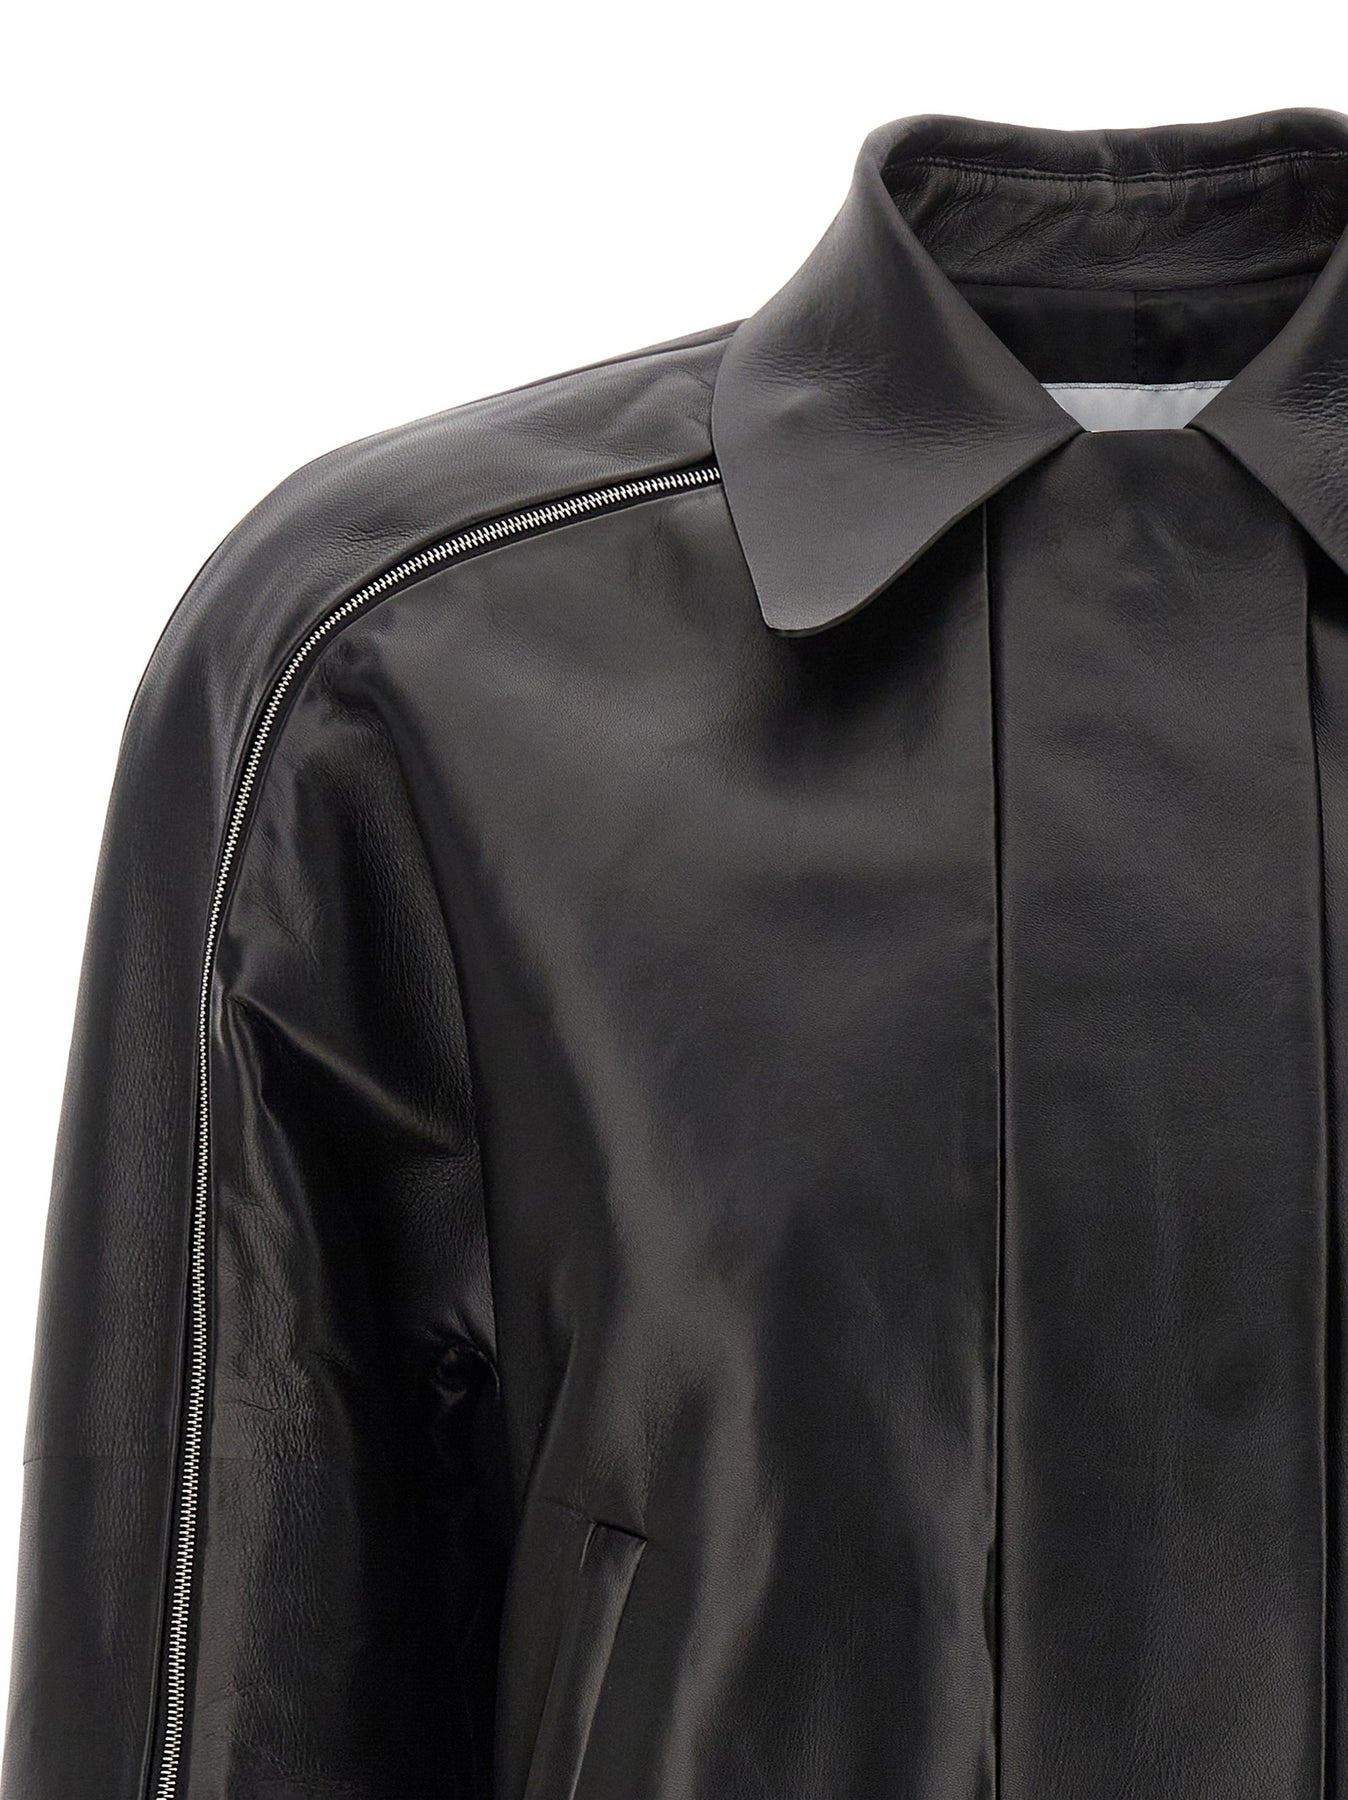 Leather Blouson Casual Jackets, Parka Black - 3